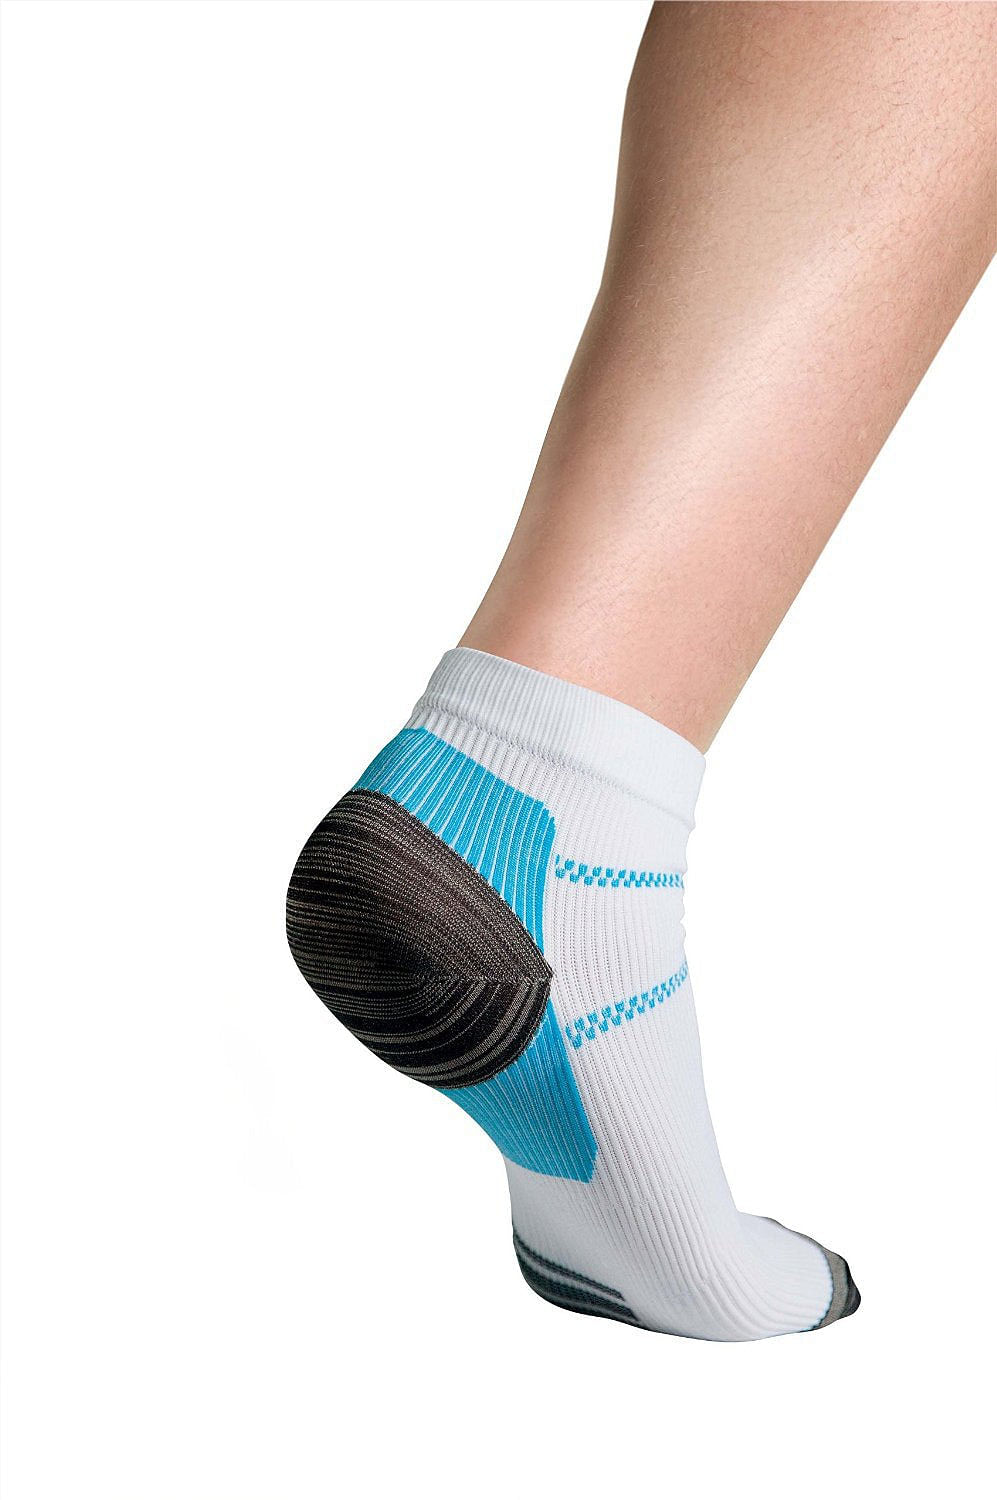 SuperSock - Socks For Plantar Fasciitis, Bone Spurs & Achilles Heel Relief